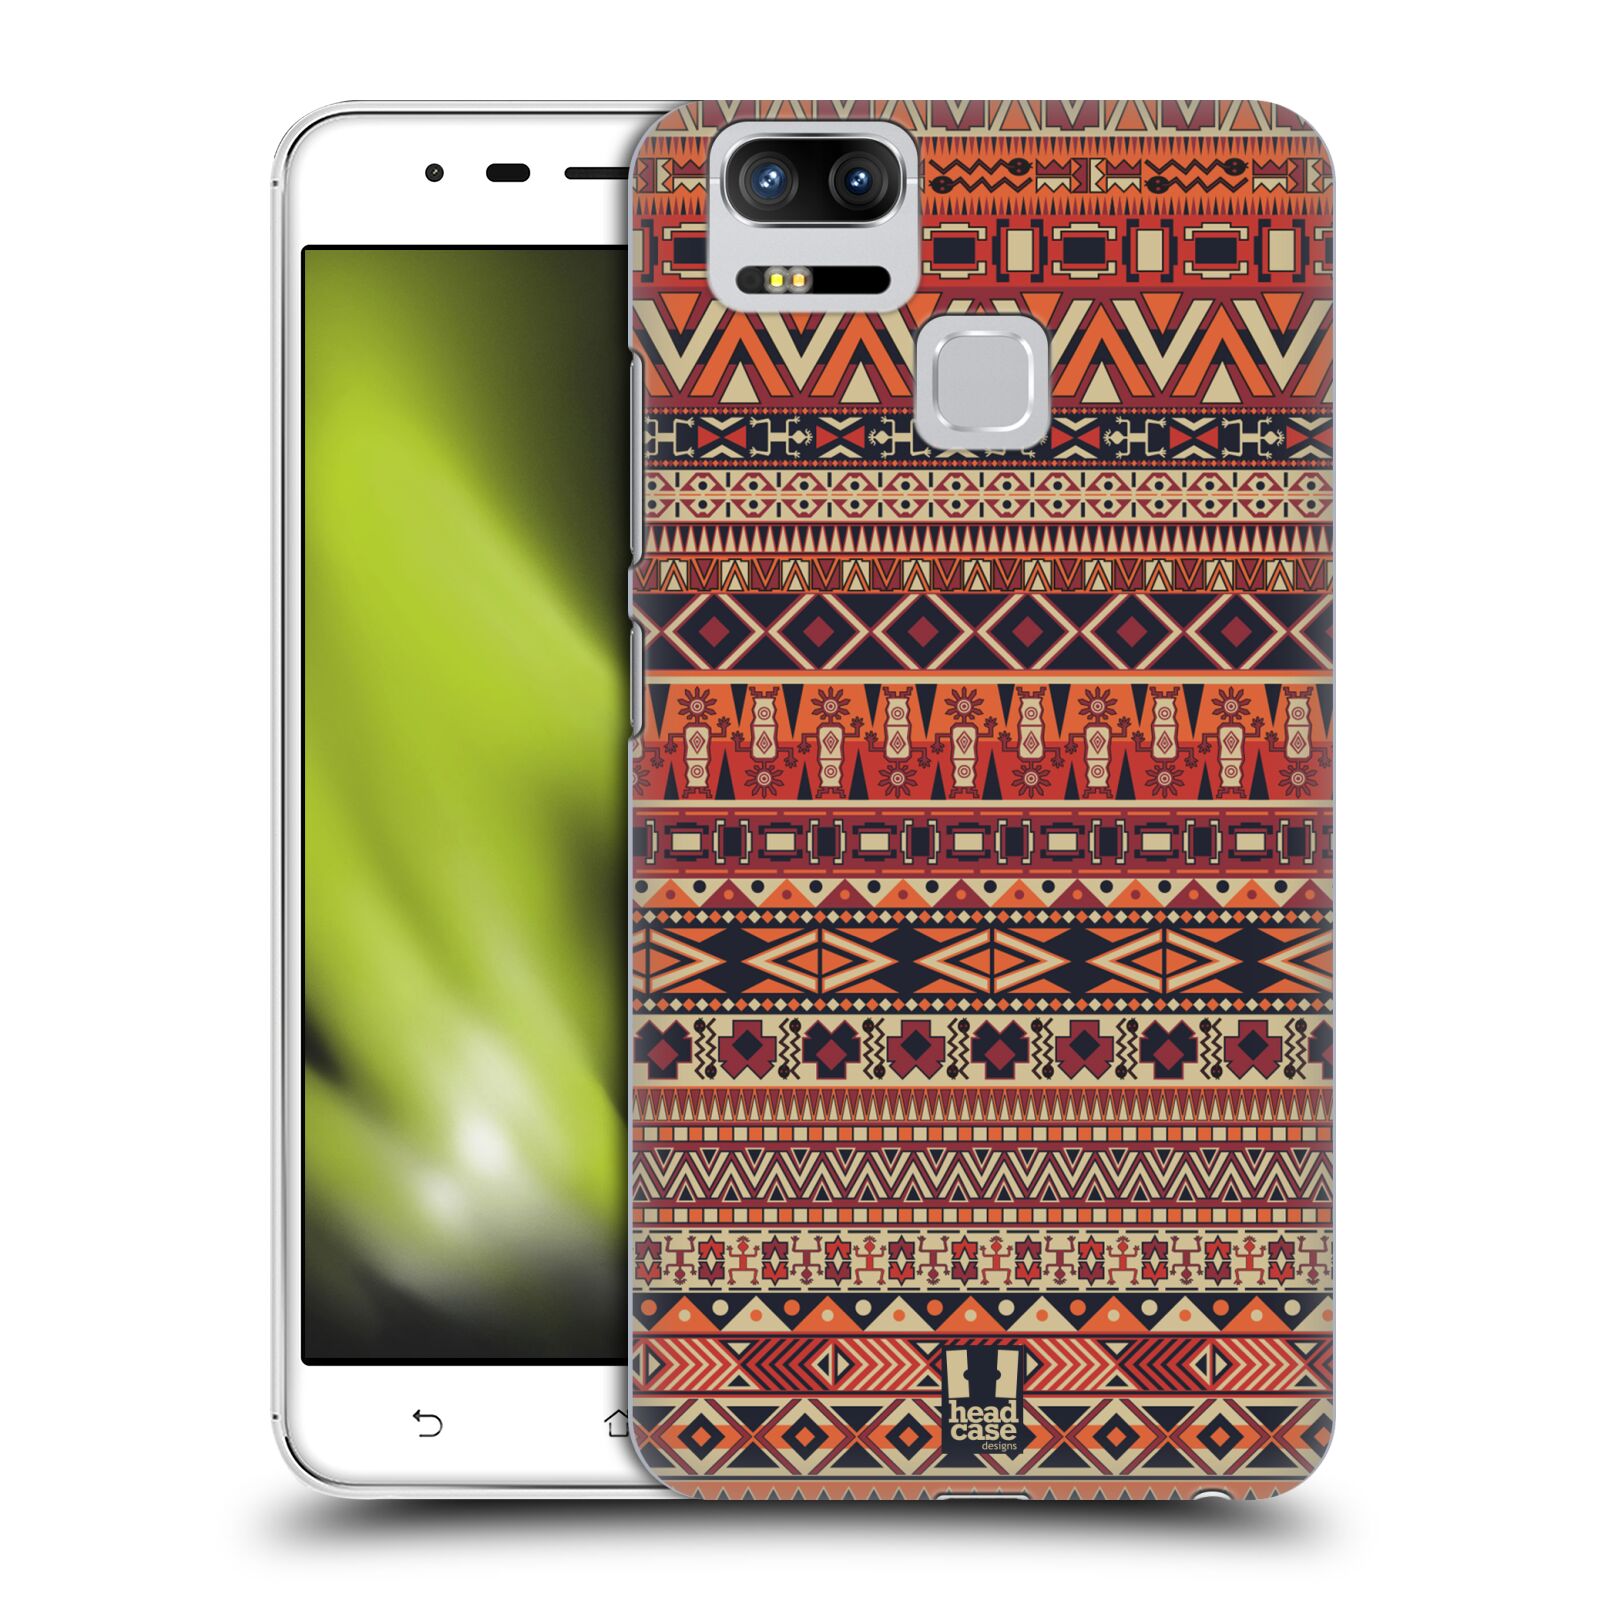 HEAD CASE plastový obal na mobil Asus Zenfone 3 Zoom ZE553KL vzor Indiánský vzor ČERVENÁ